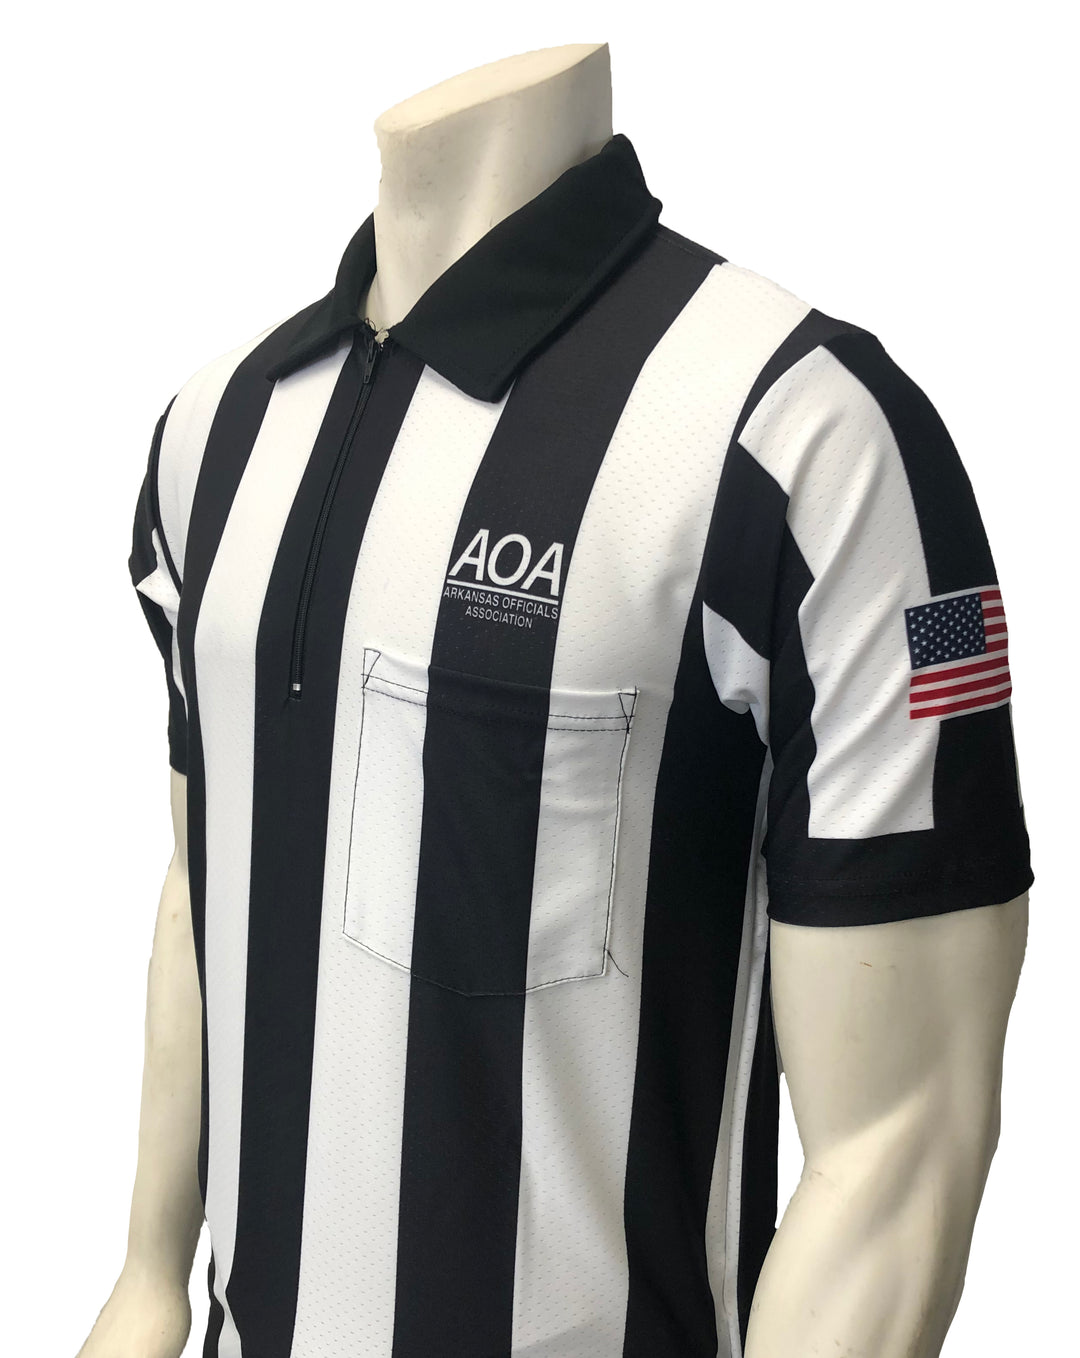 USA130AR-607 - Smitty "Made in USA" - "BODY FLEX" "AOA" Short Sleeve Football Shirt